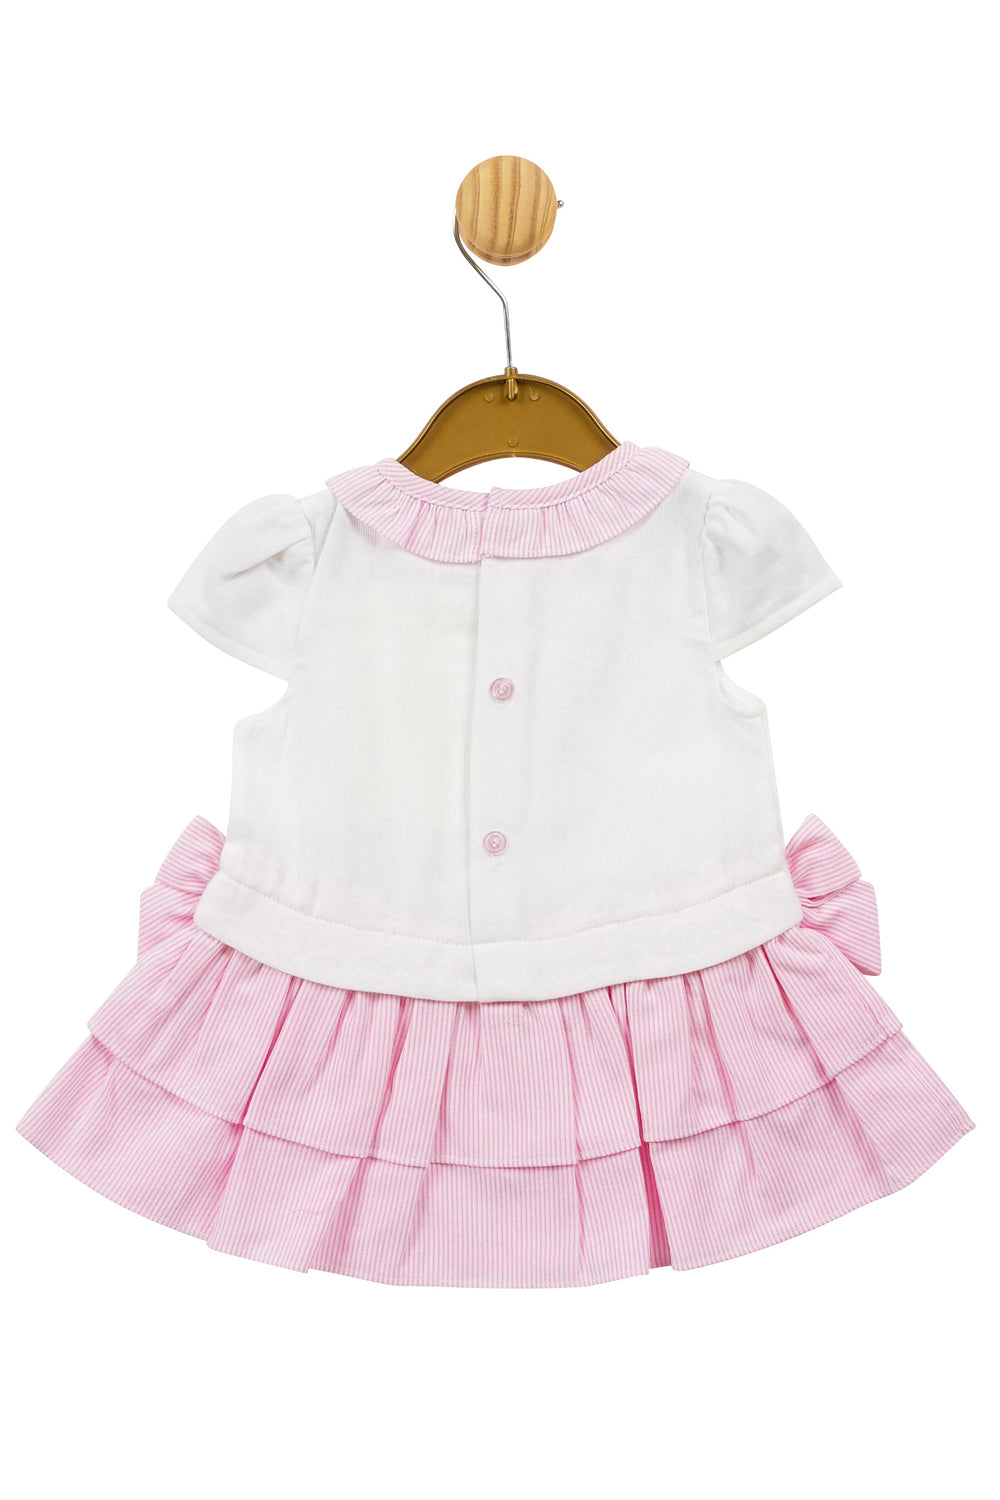 Mintini Baby "Ava" Pink Striped Drop Waist Dress | Millie and John